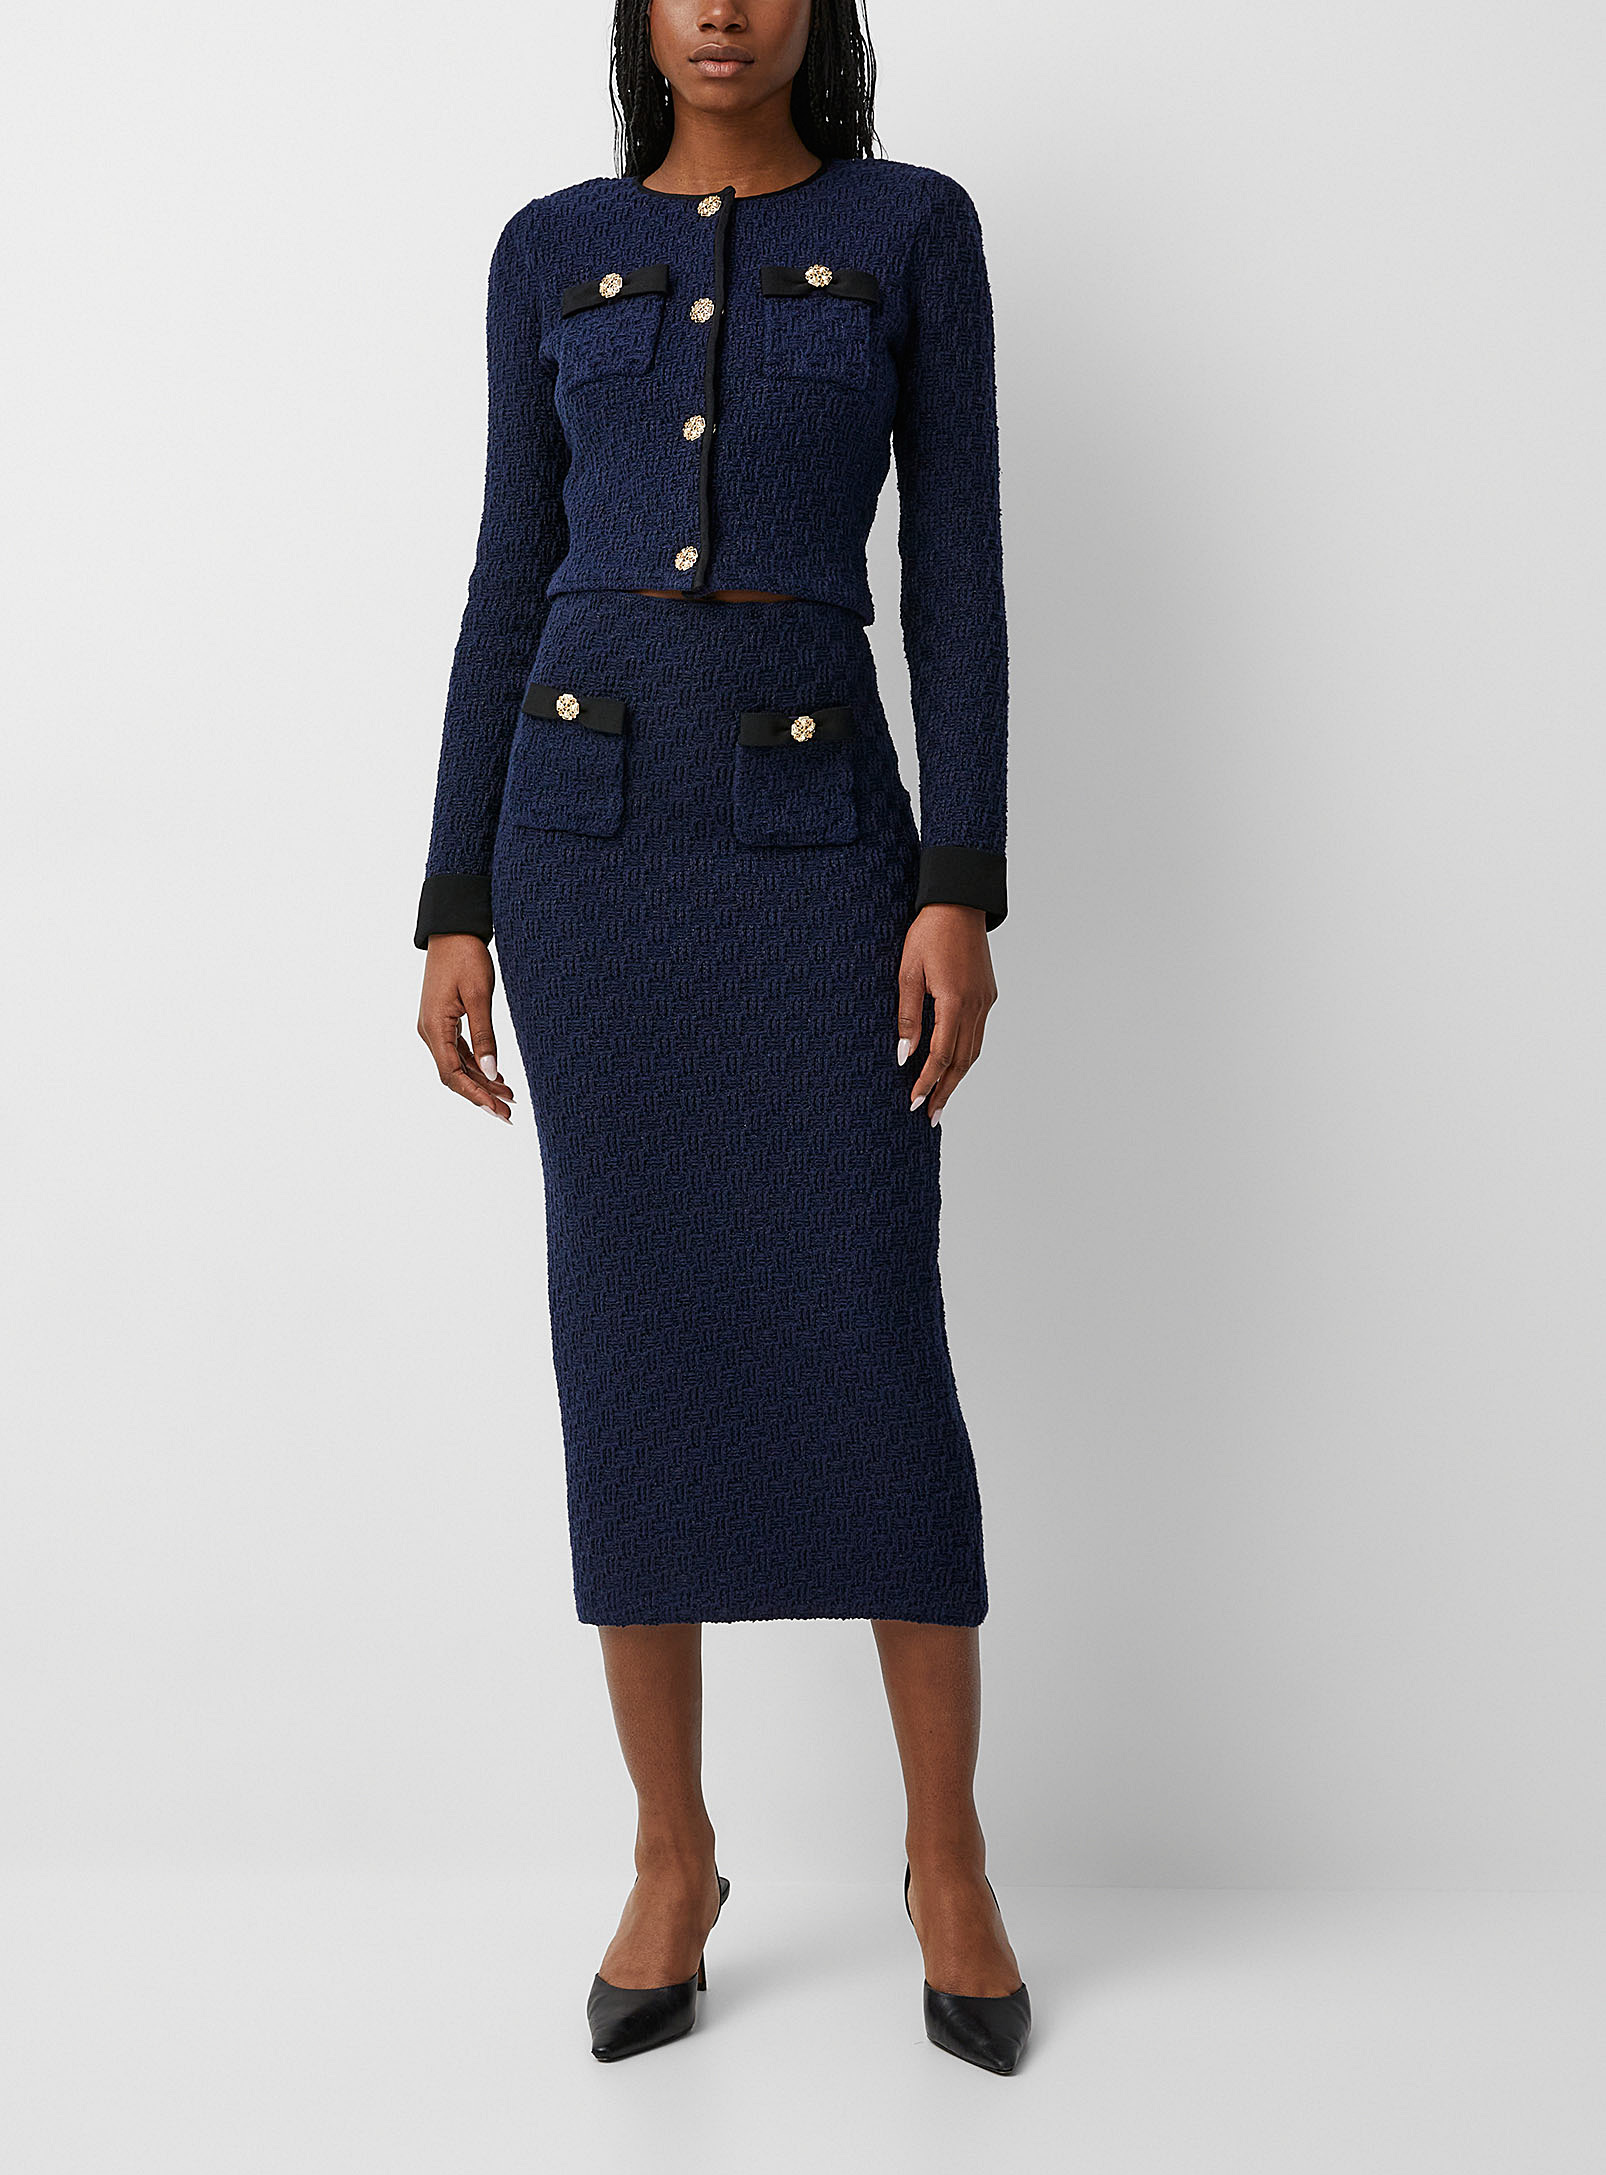 Self-Portrait - Women's Navy blue knit pencil skirt